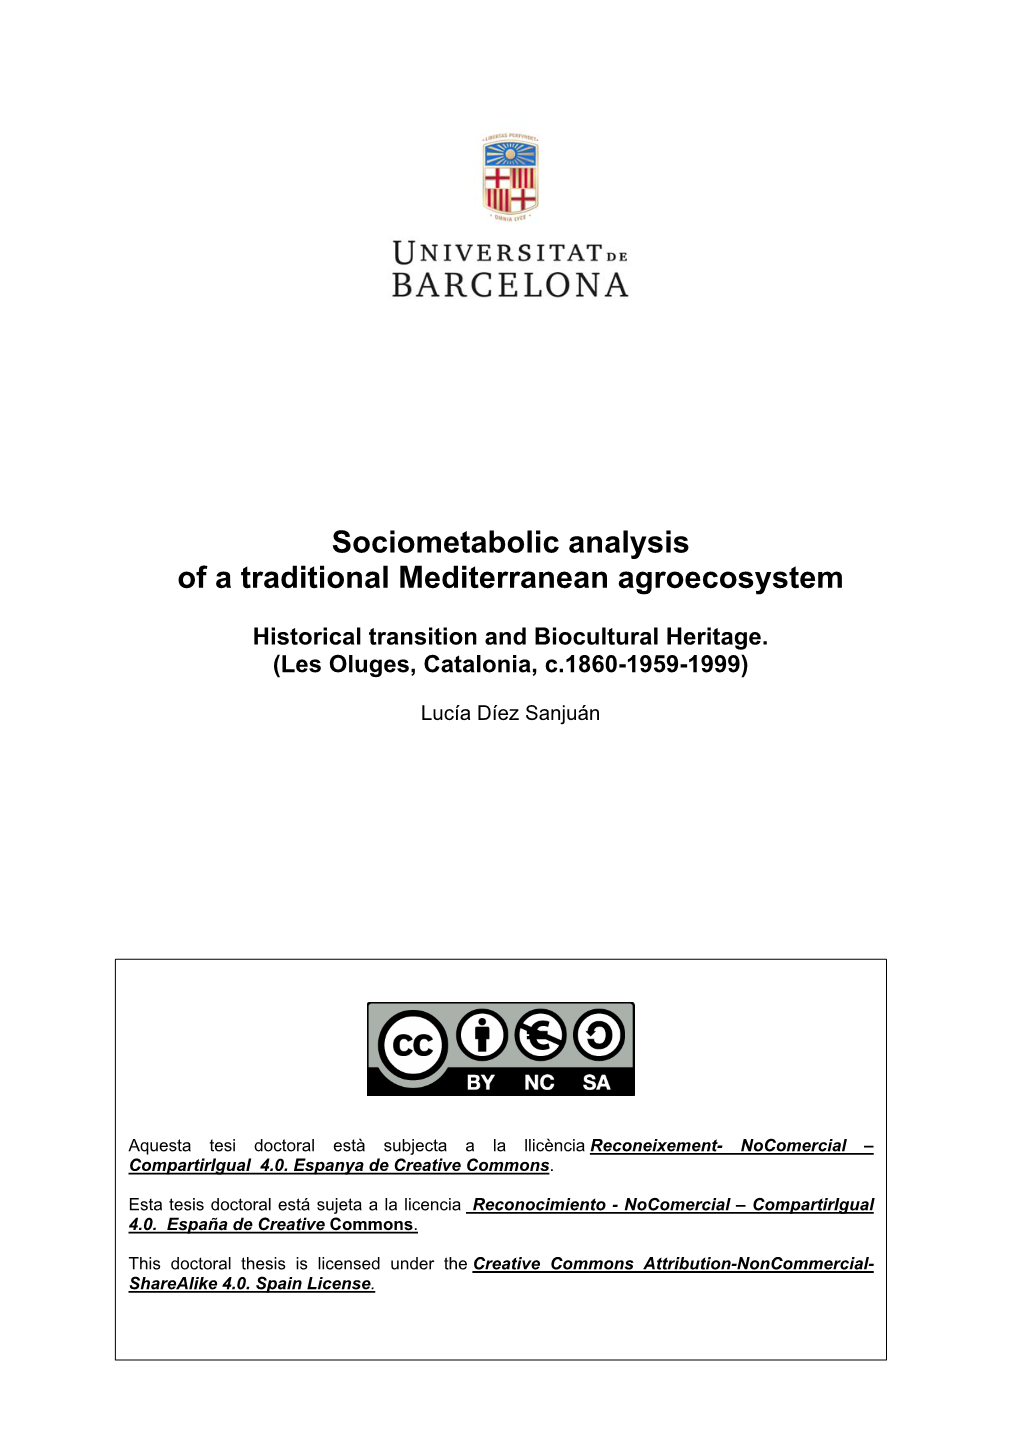 Sociometabolic Analysis of a Traditional Mediterranean Agroecosystem